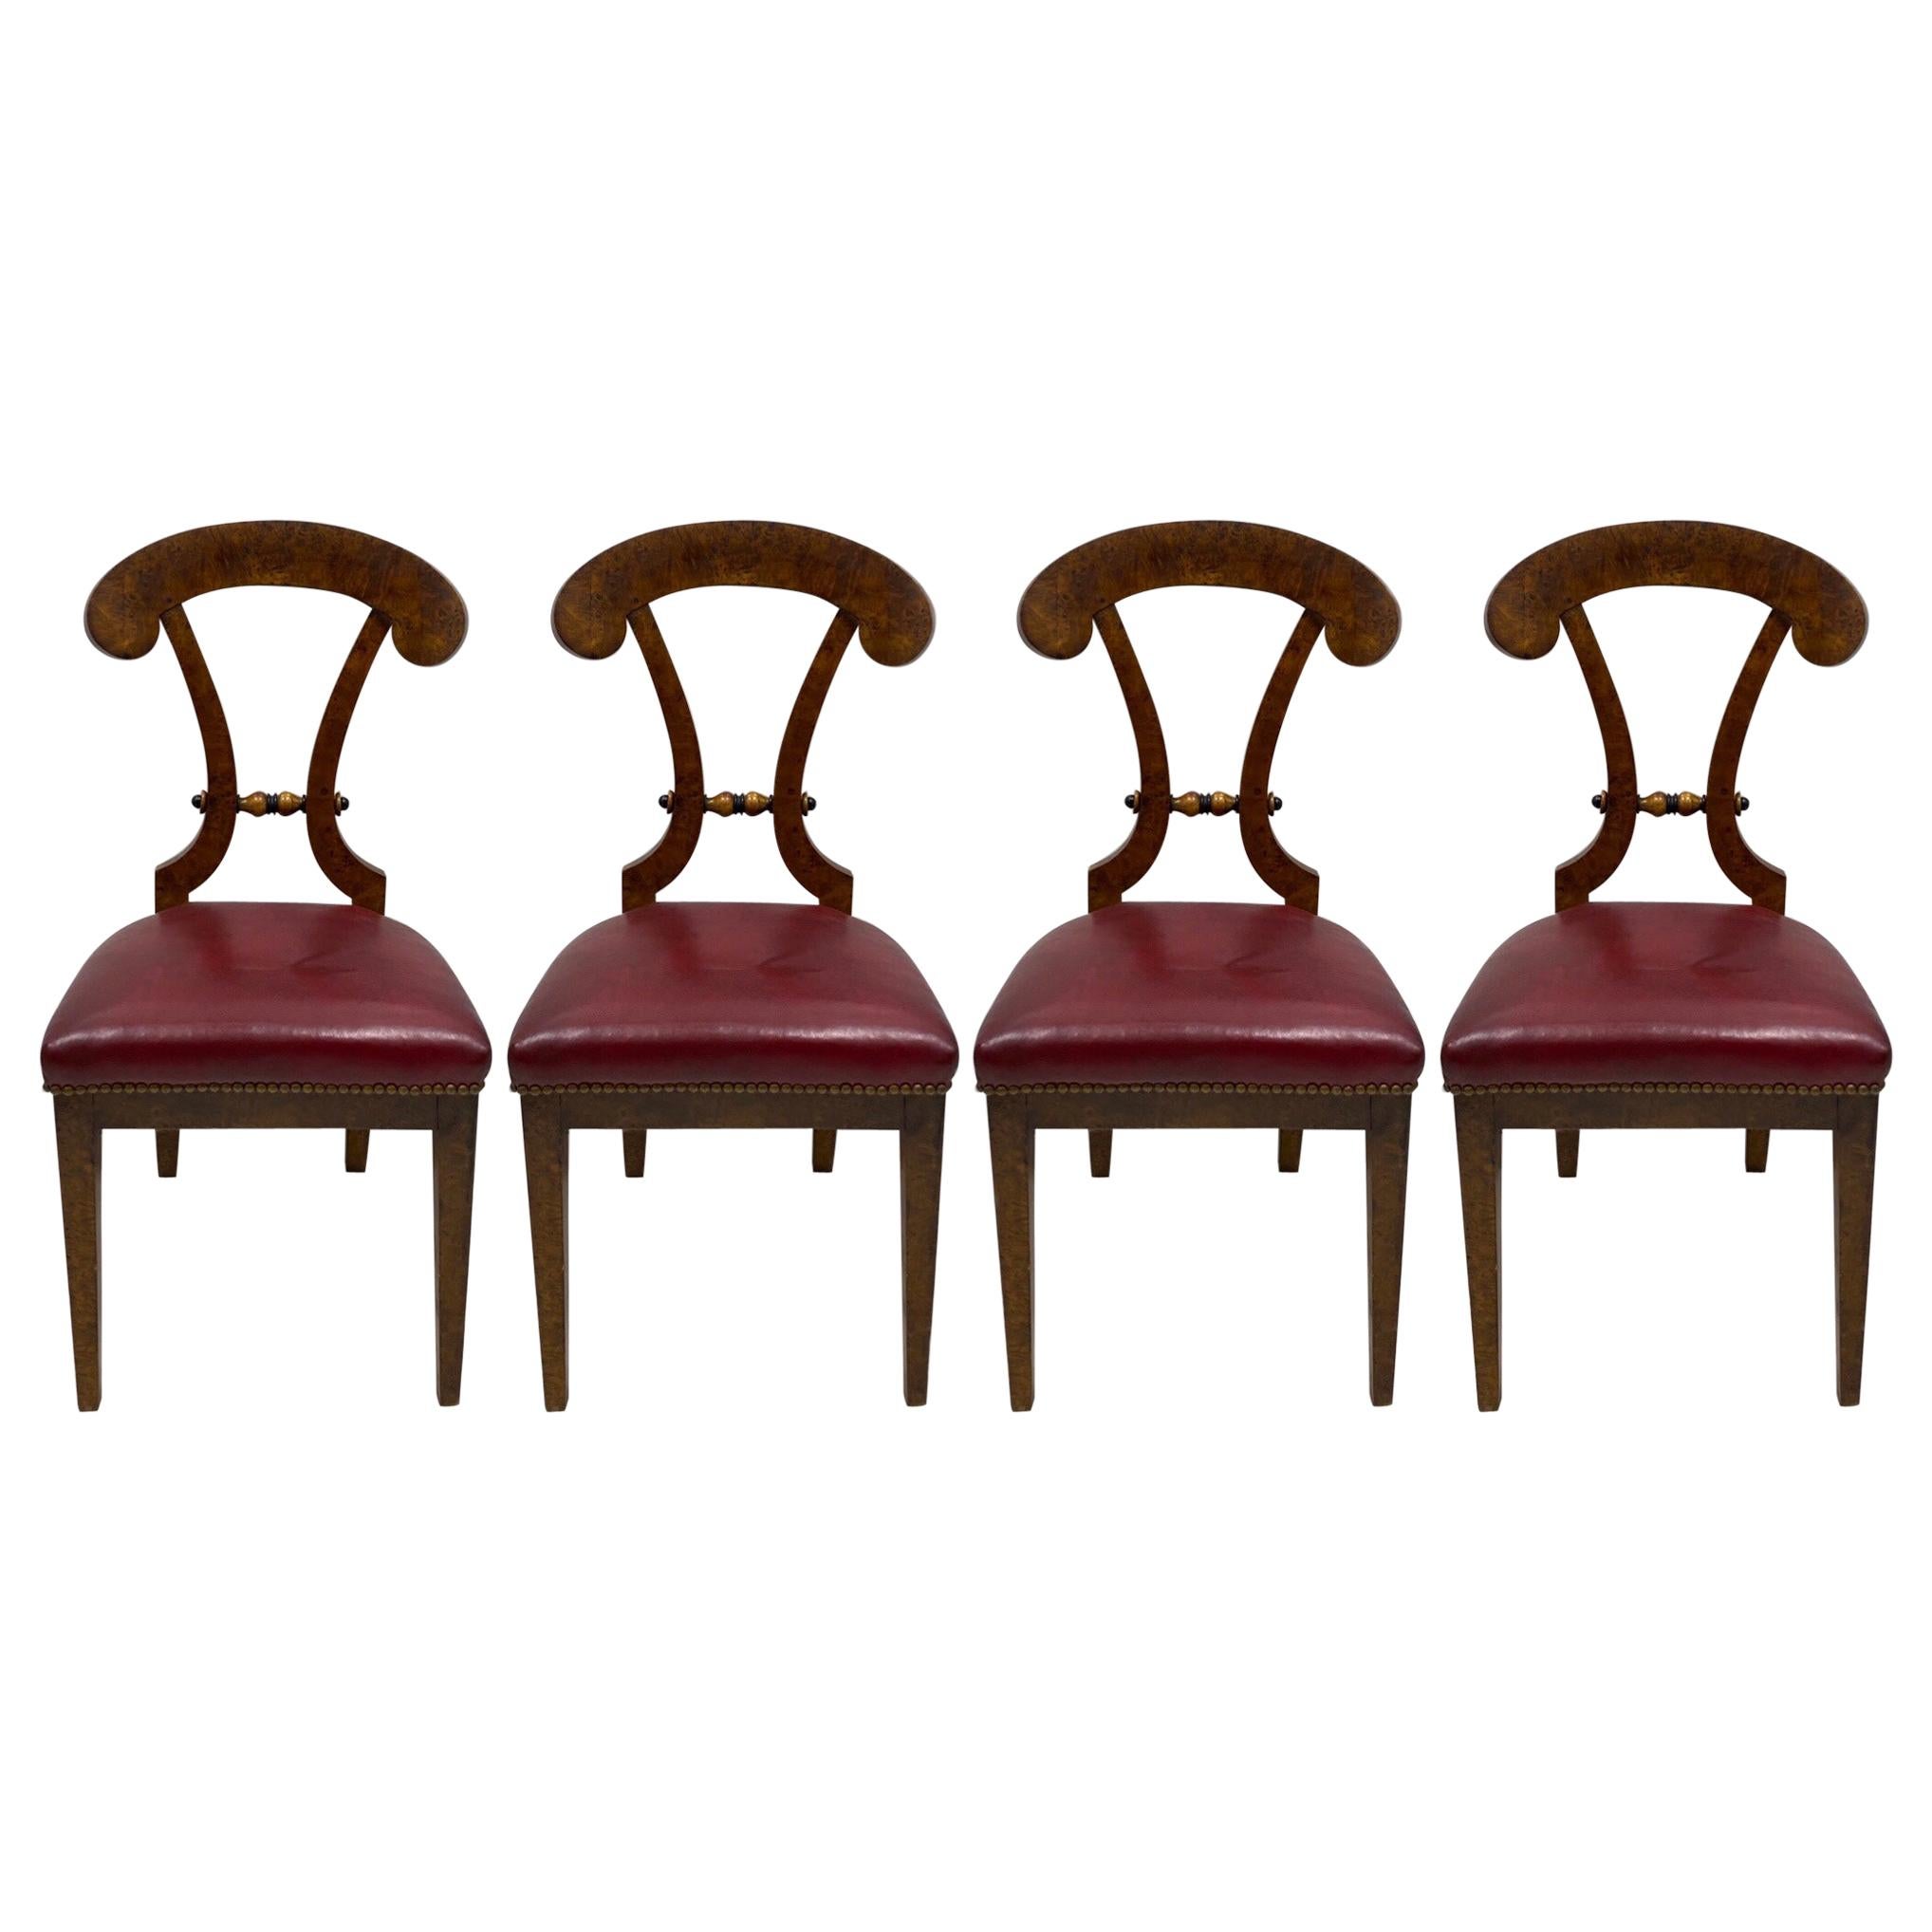 Art Deco Biedermeier Burlwood and Leather Chairs, Set of 4